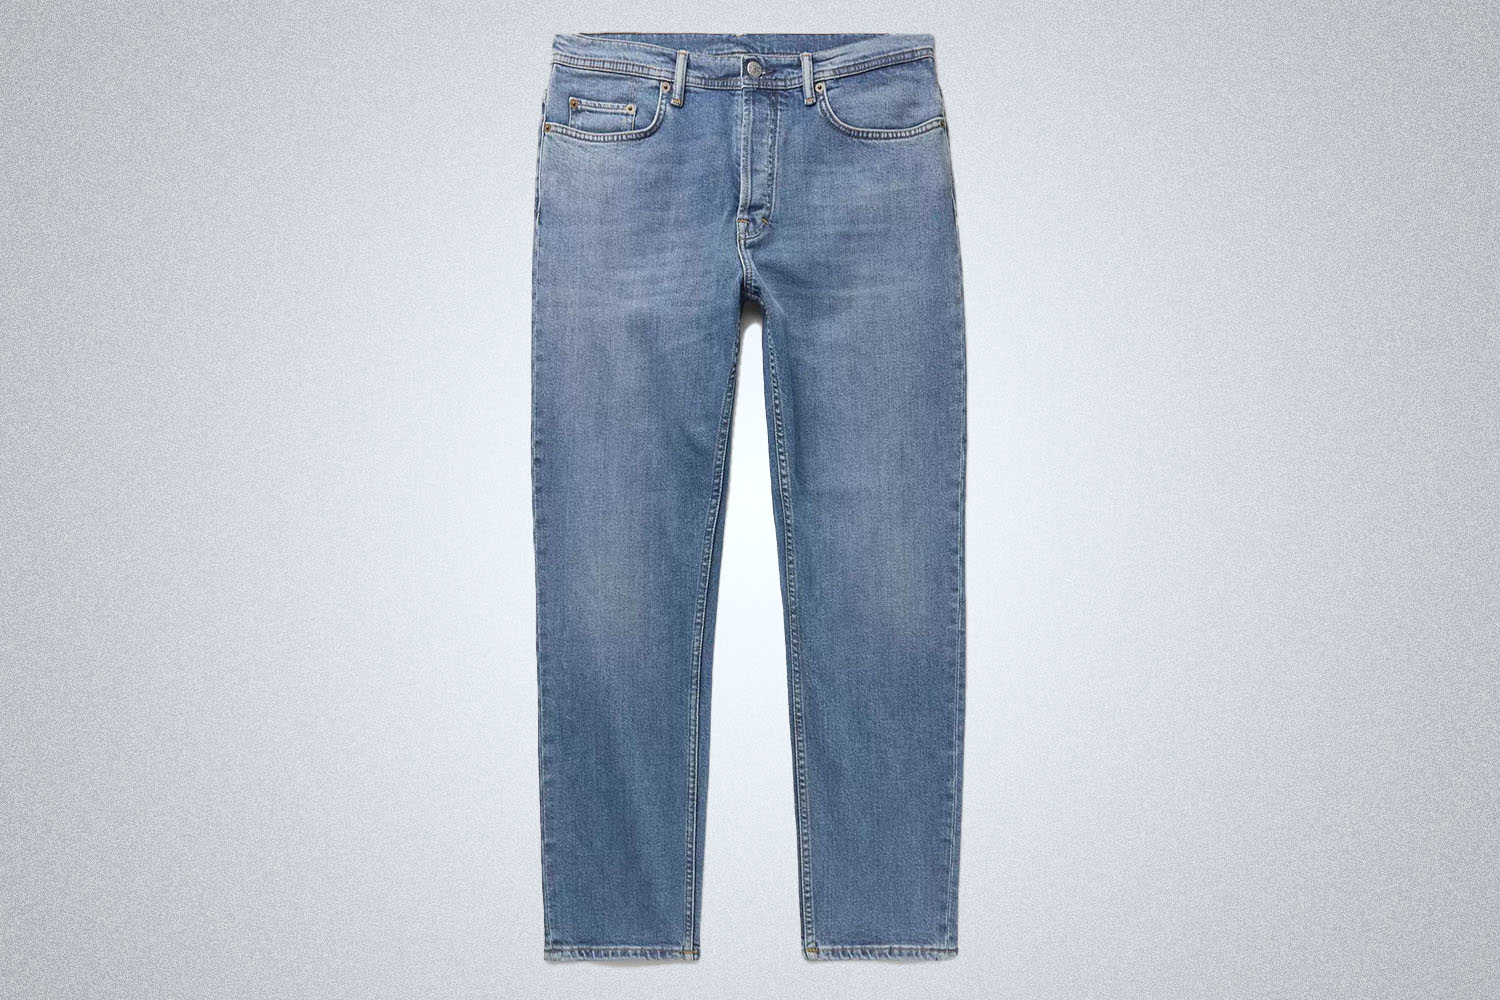 a pair of high-end medium blue jeans